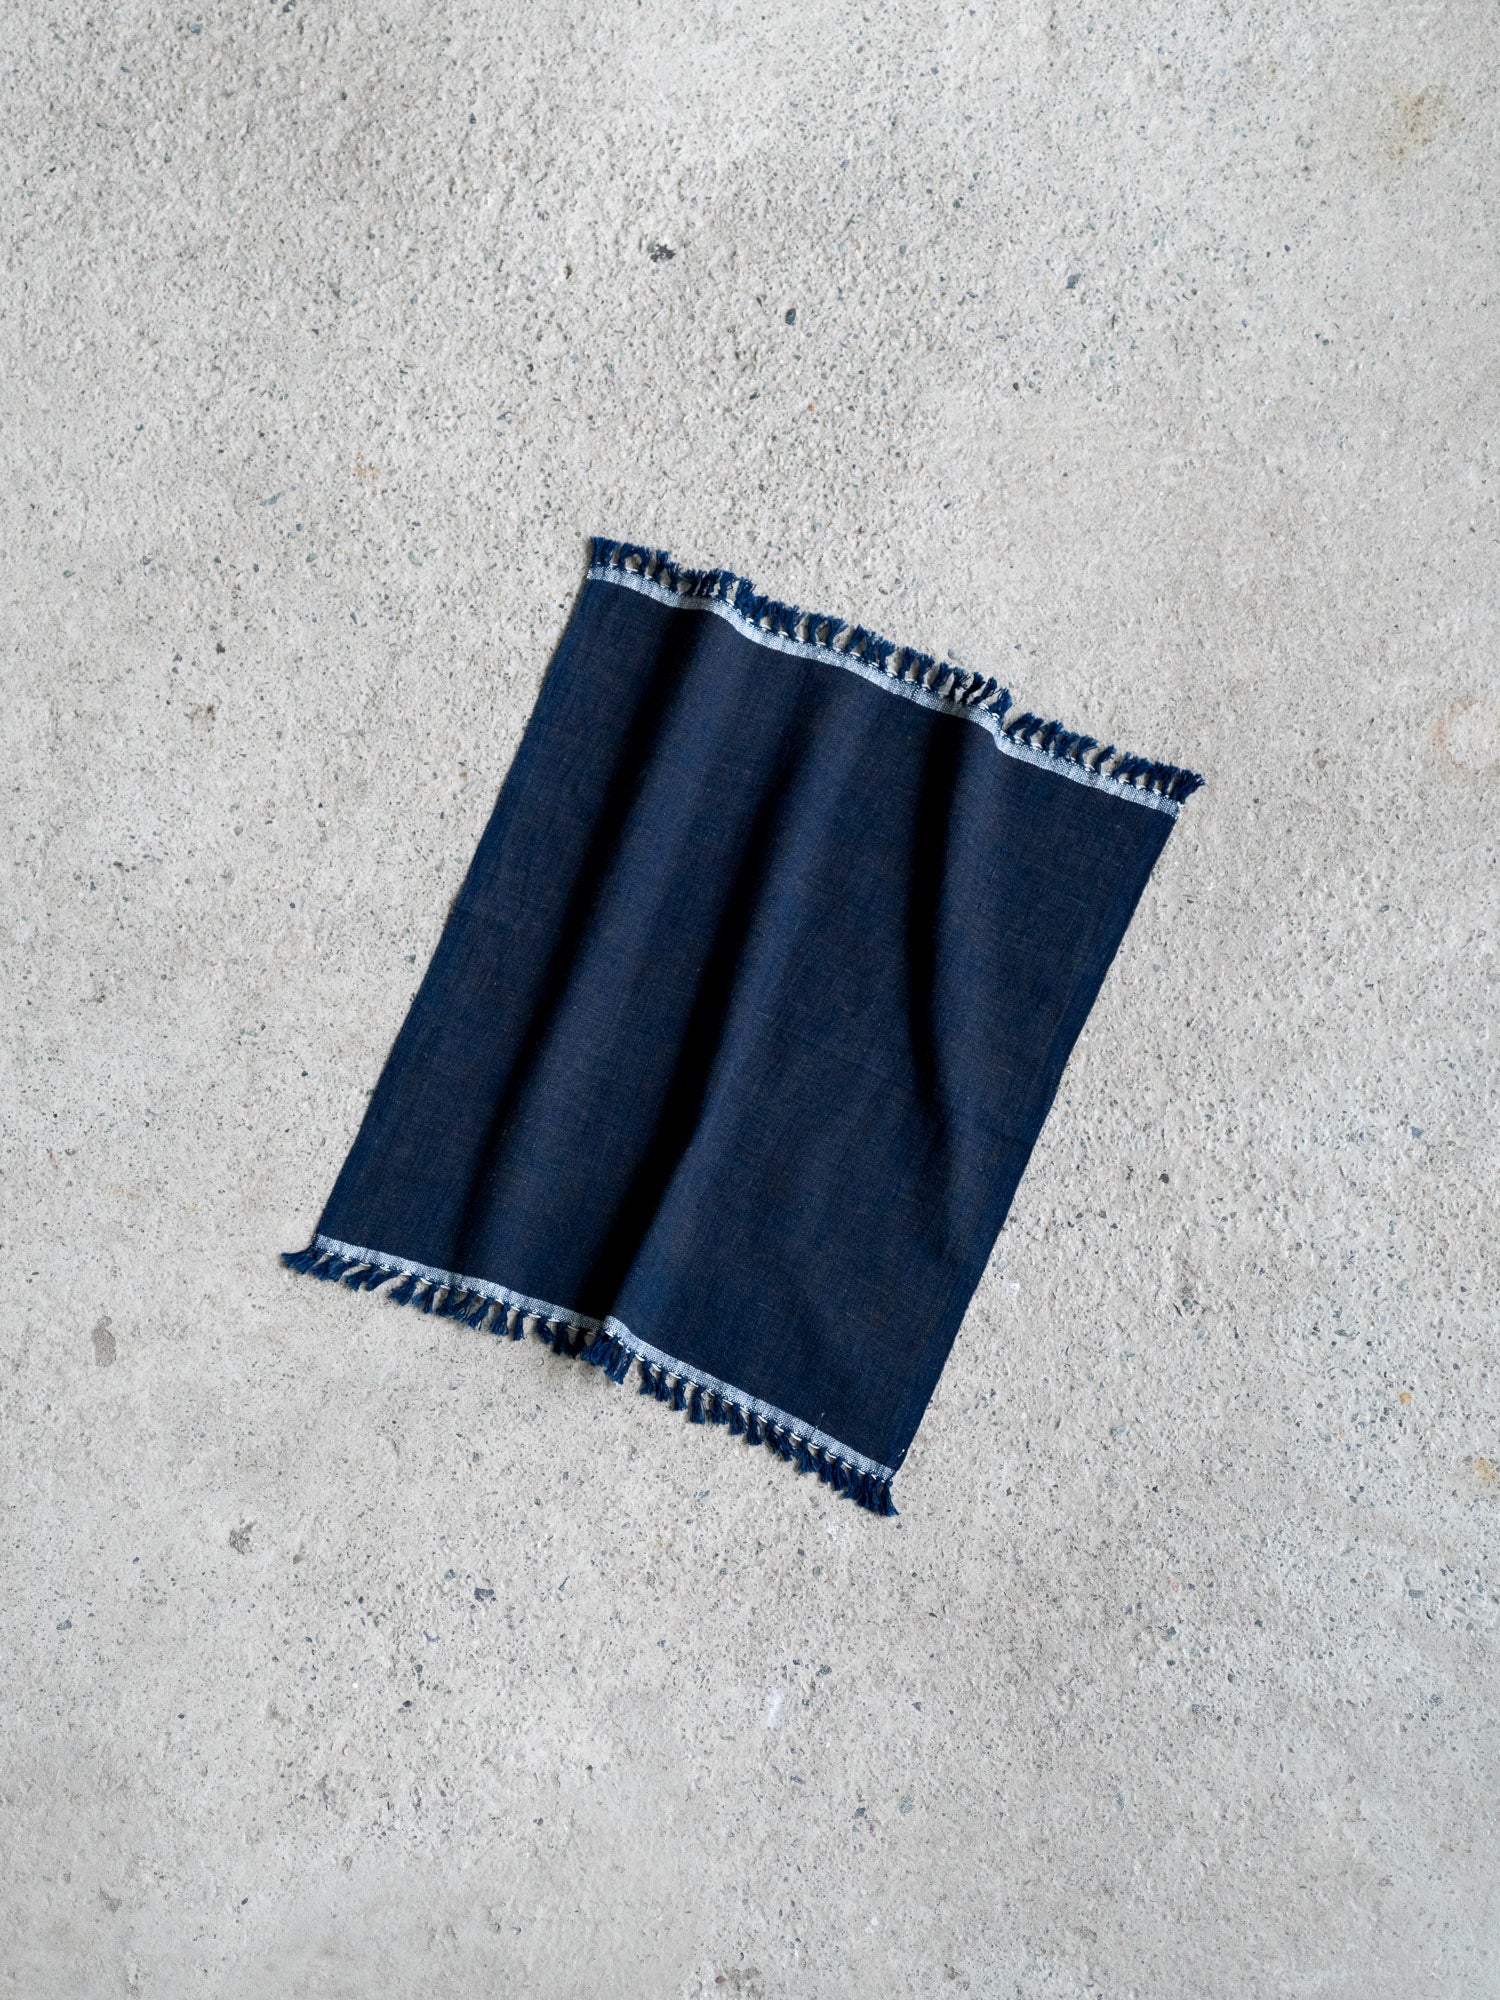 Khadi Cotton Hand Towel – Indigo